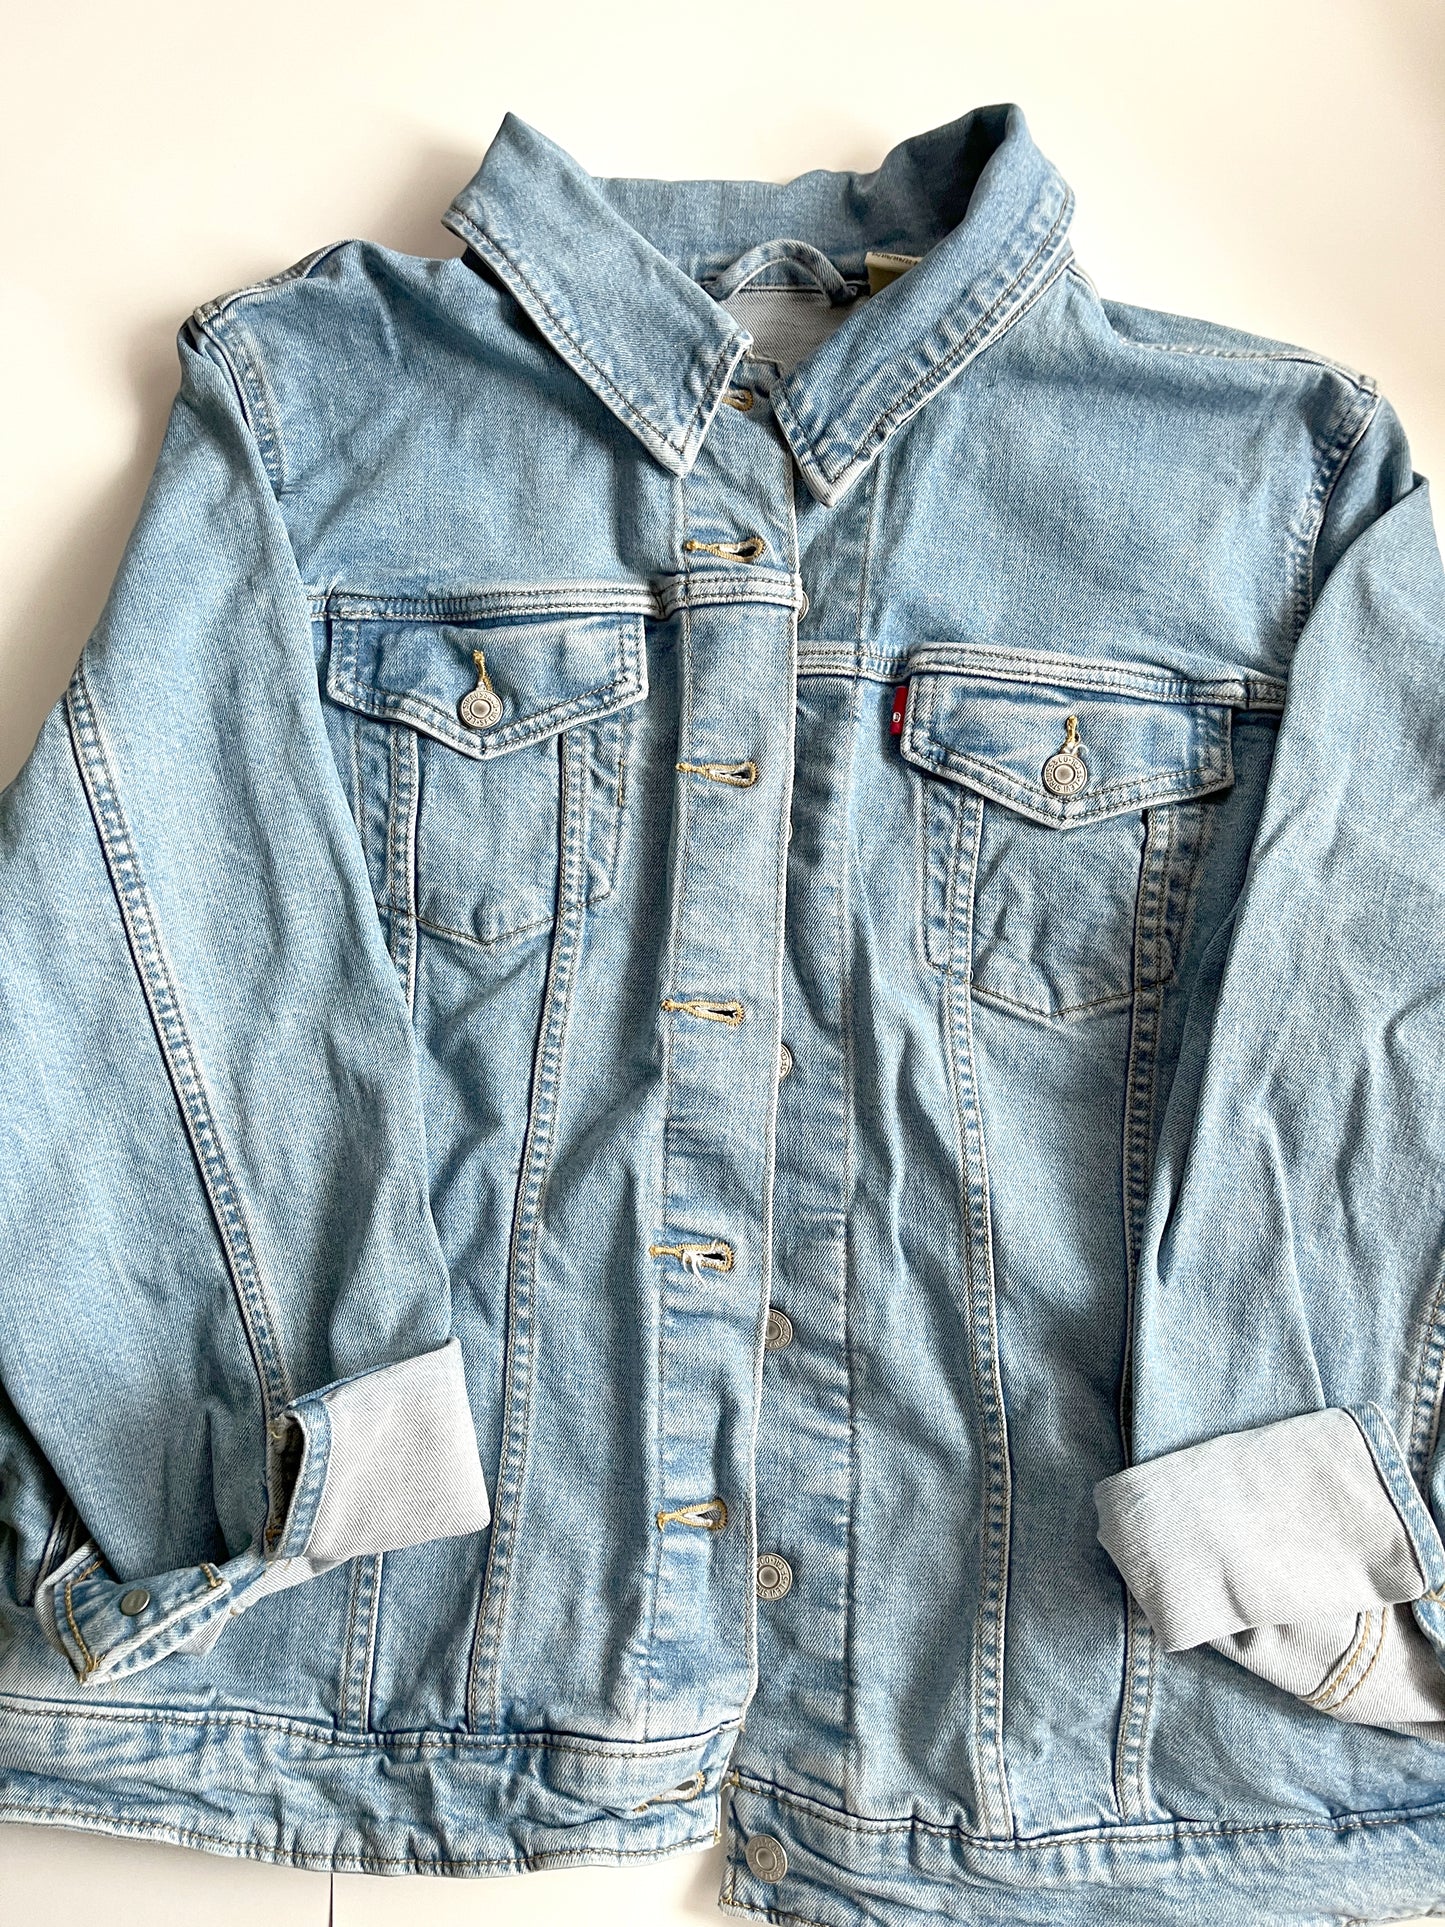 3XL "Flourishing" embroidered Levi's jean jacket